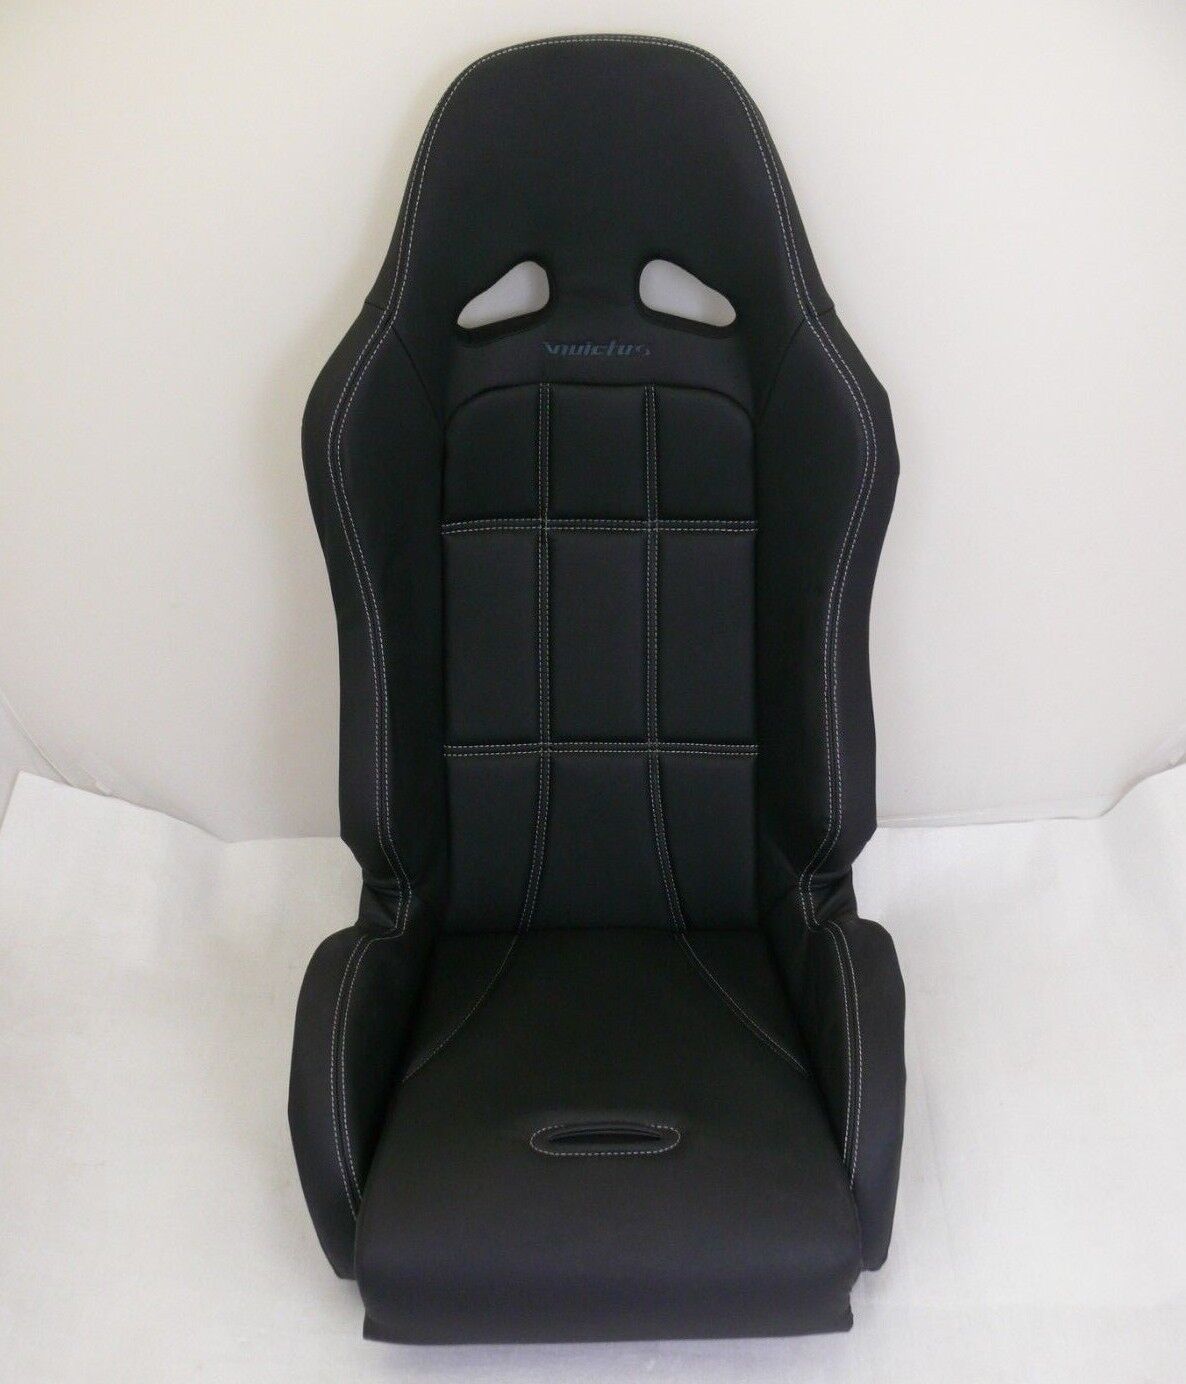 InVictus Bucket Race Seat Black Custom Stitched UTV Side by Side RZR Maverick